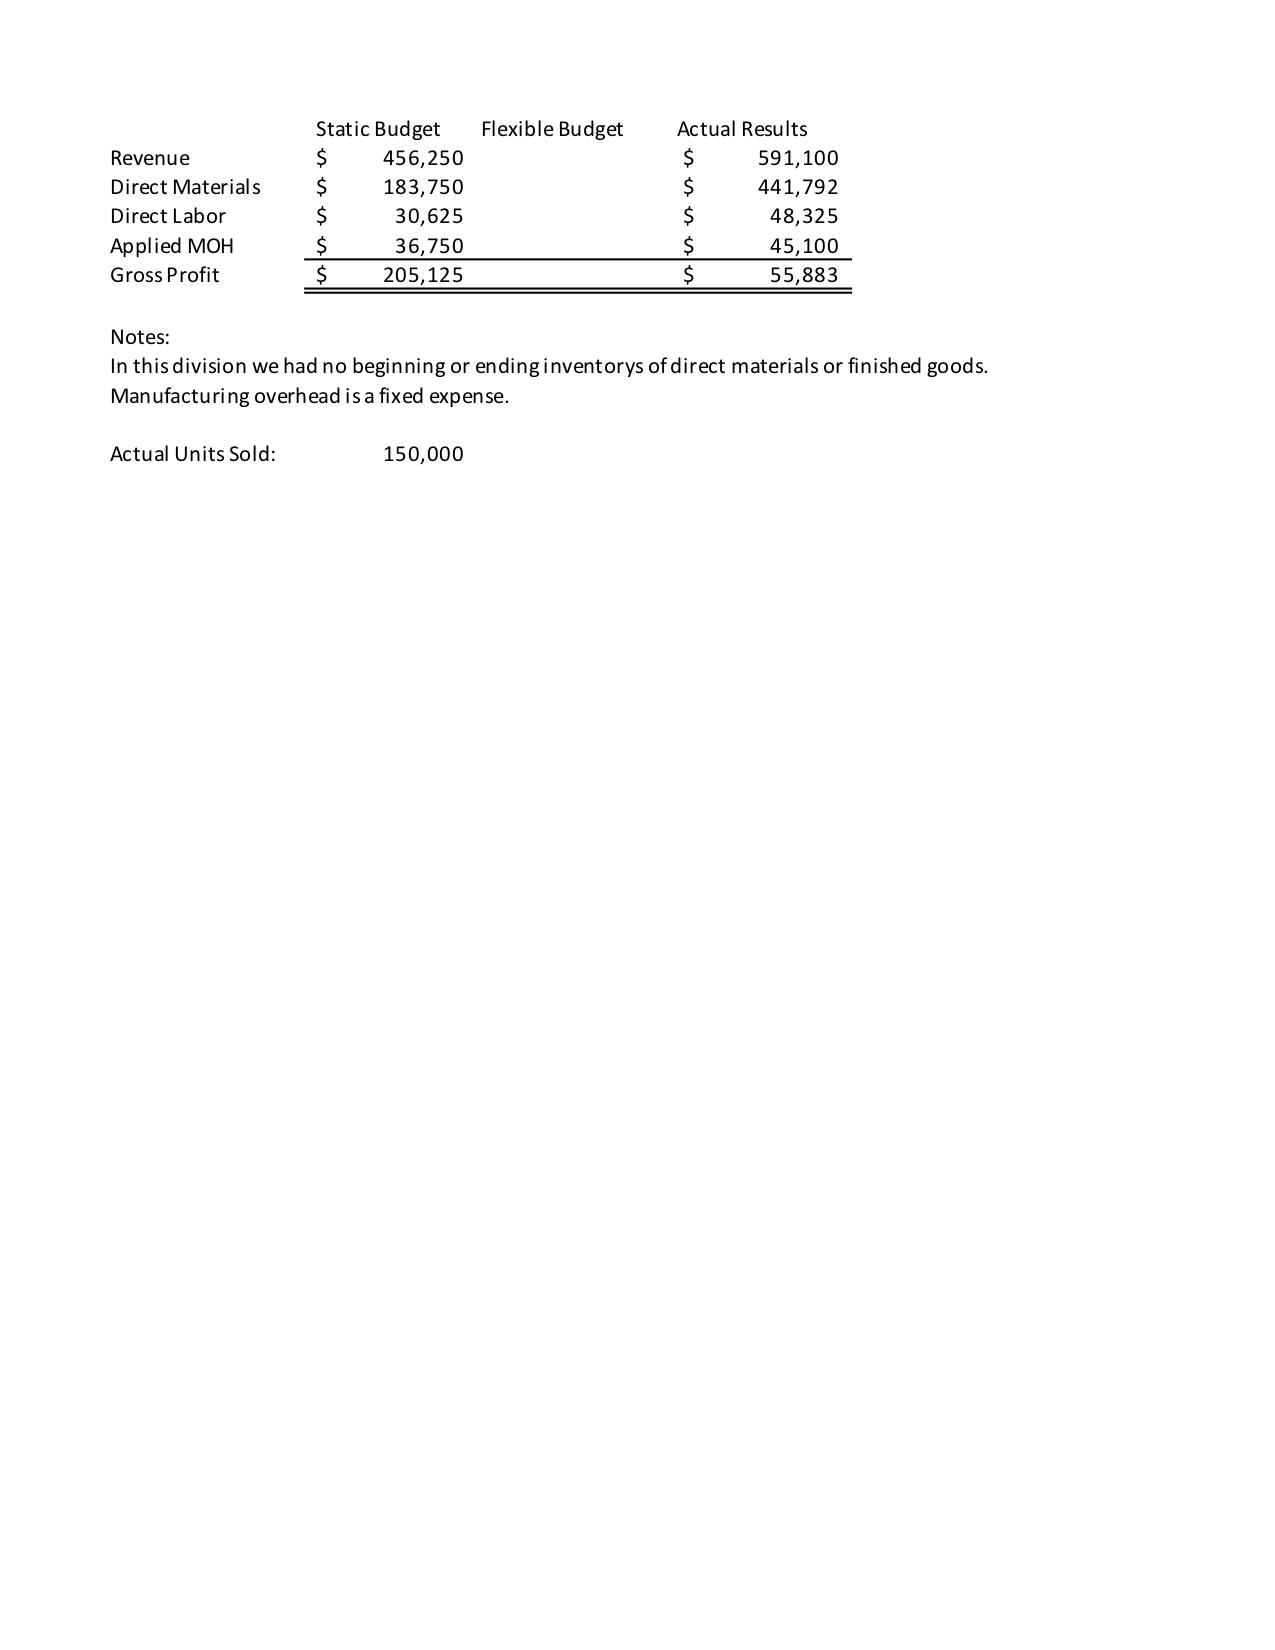 Flexible BudgetRevenueDirect MaterialsDirect LaborApplied MOHGross ProfitStatic Budget$ 456,250$ 183,750$ 30,625$ 3